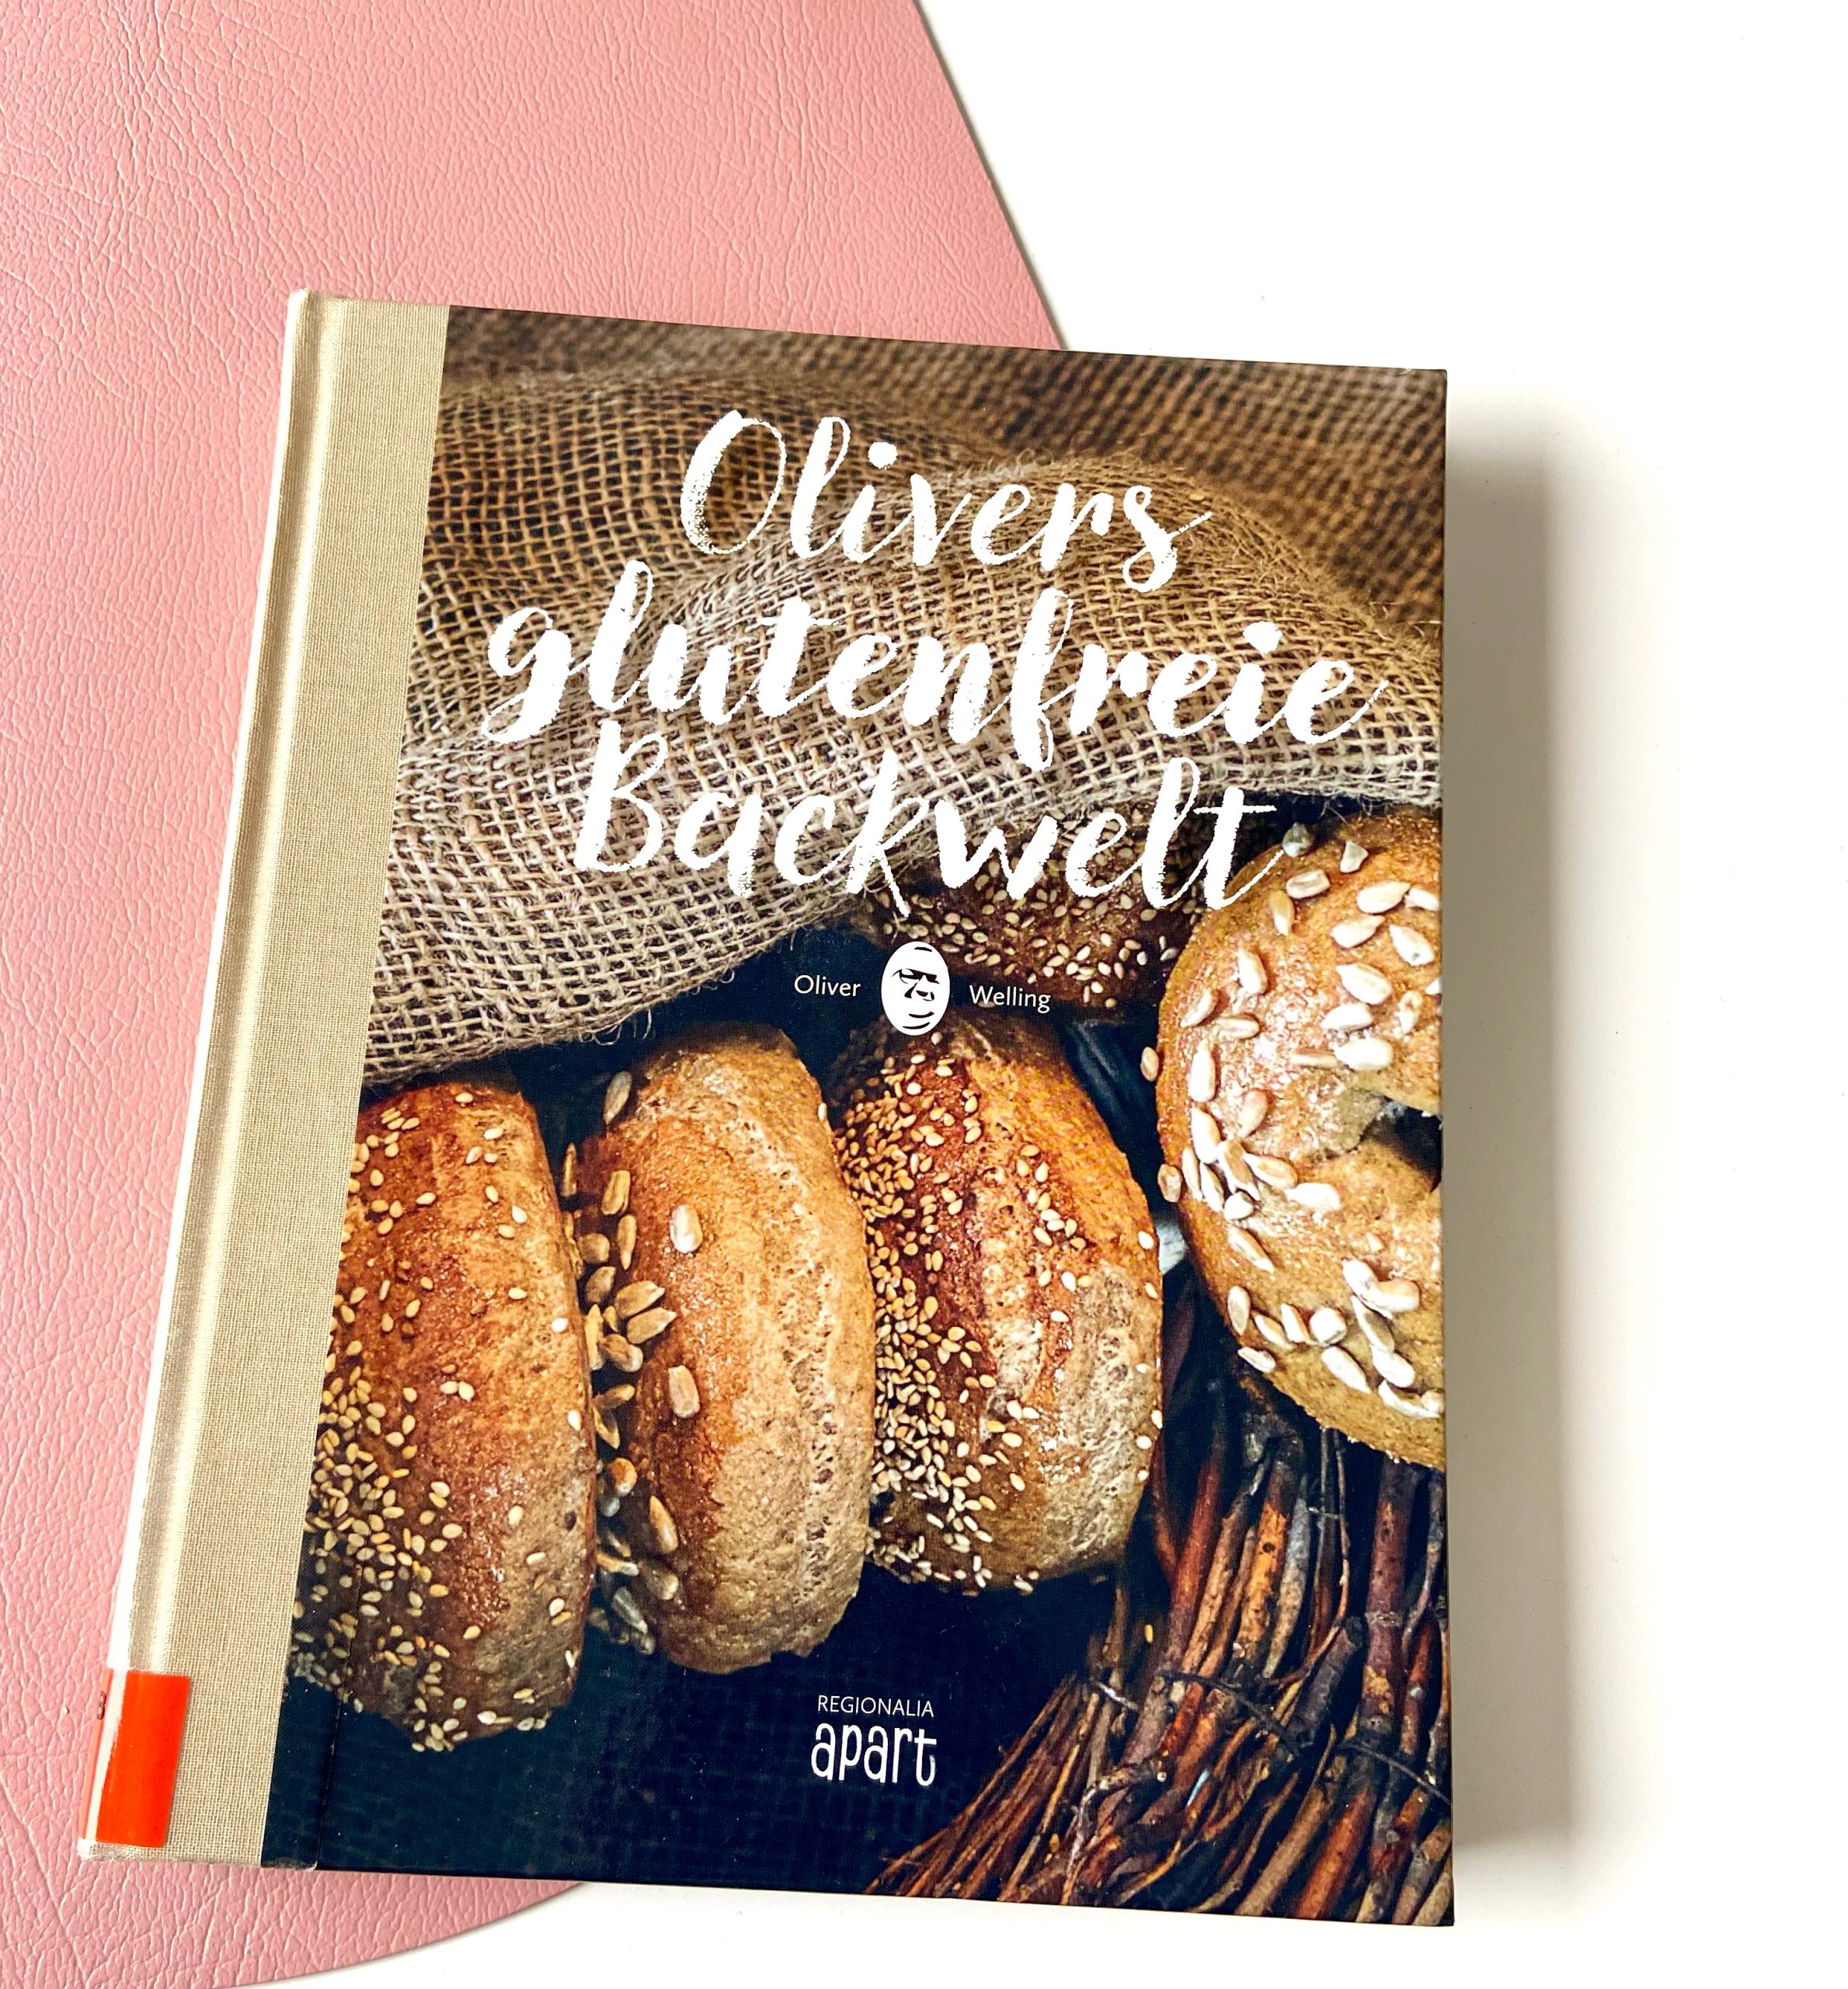 Olivers glutenfreie Backwelt